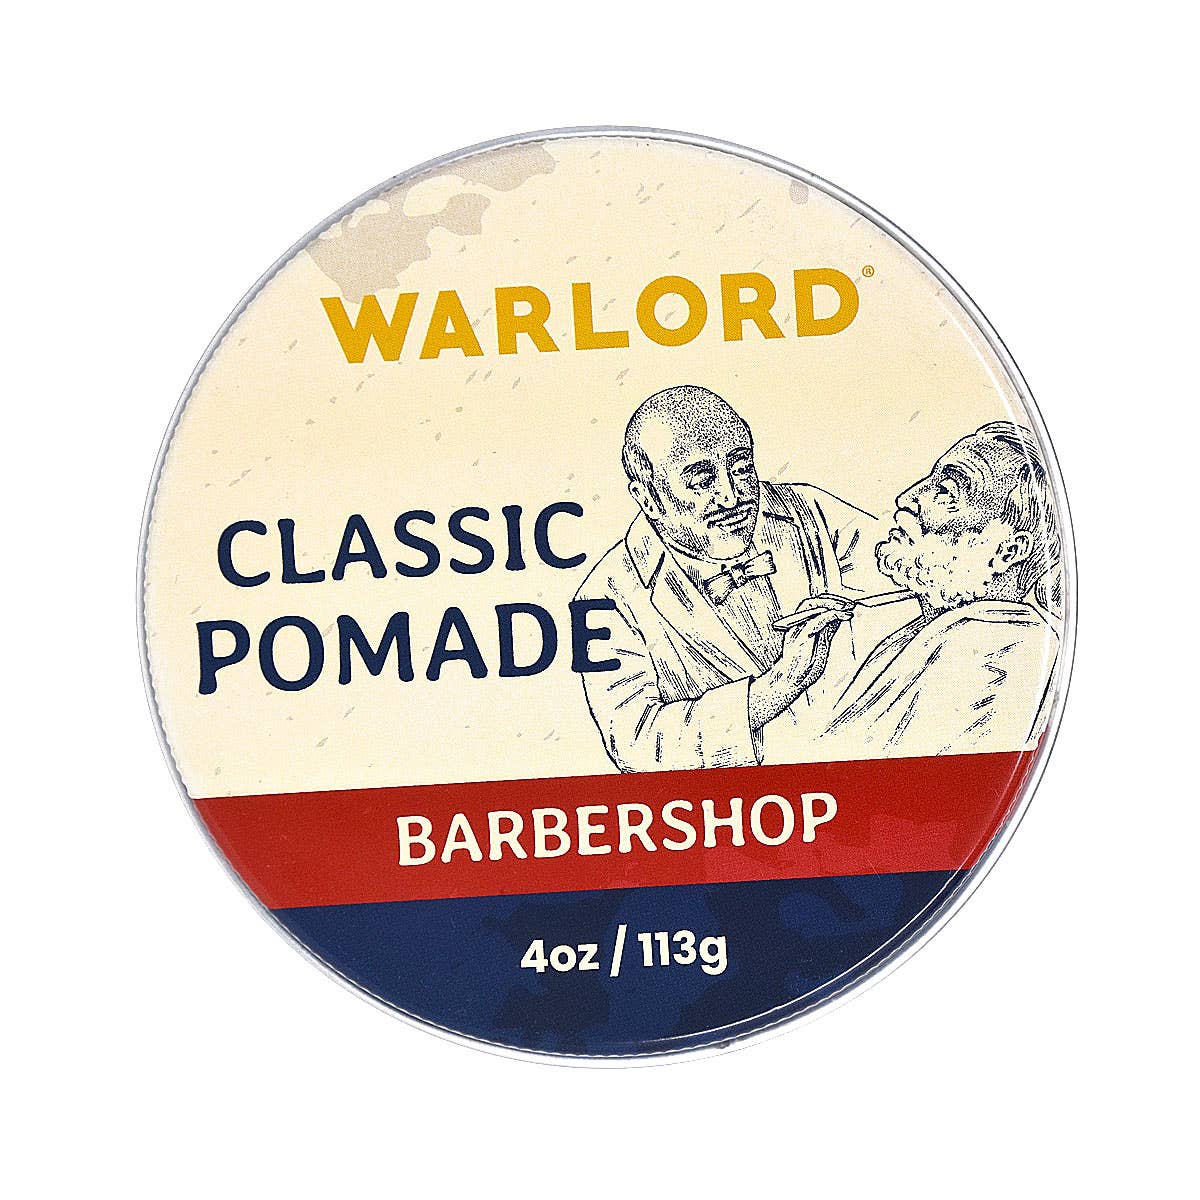 Warlord Classic Pomade – Barbershop